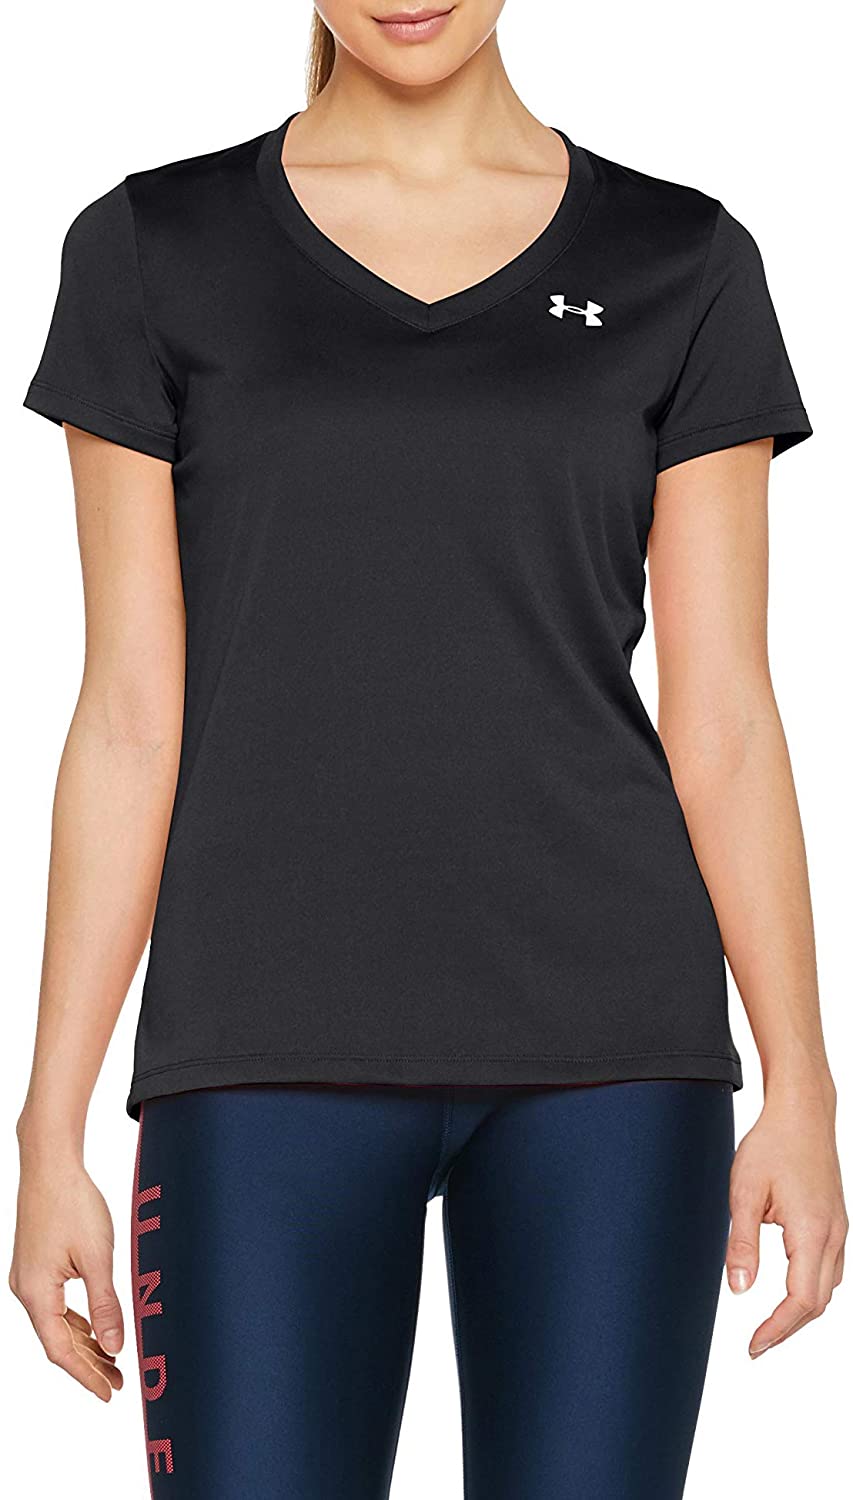 Under Armour Women's Tech V-Neck Short Sleeve T-Shirt | eBay